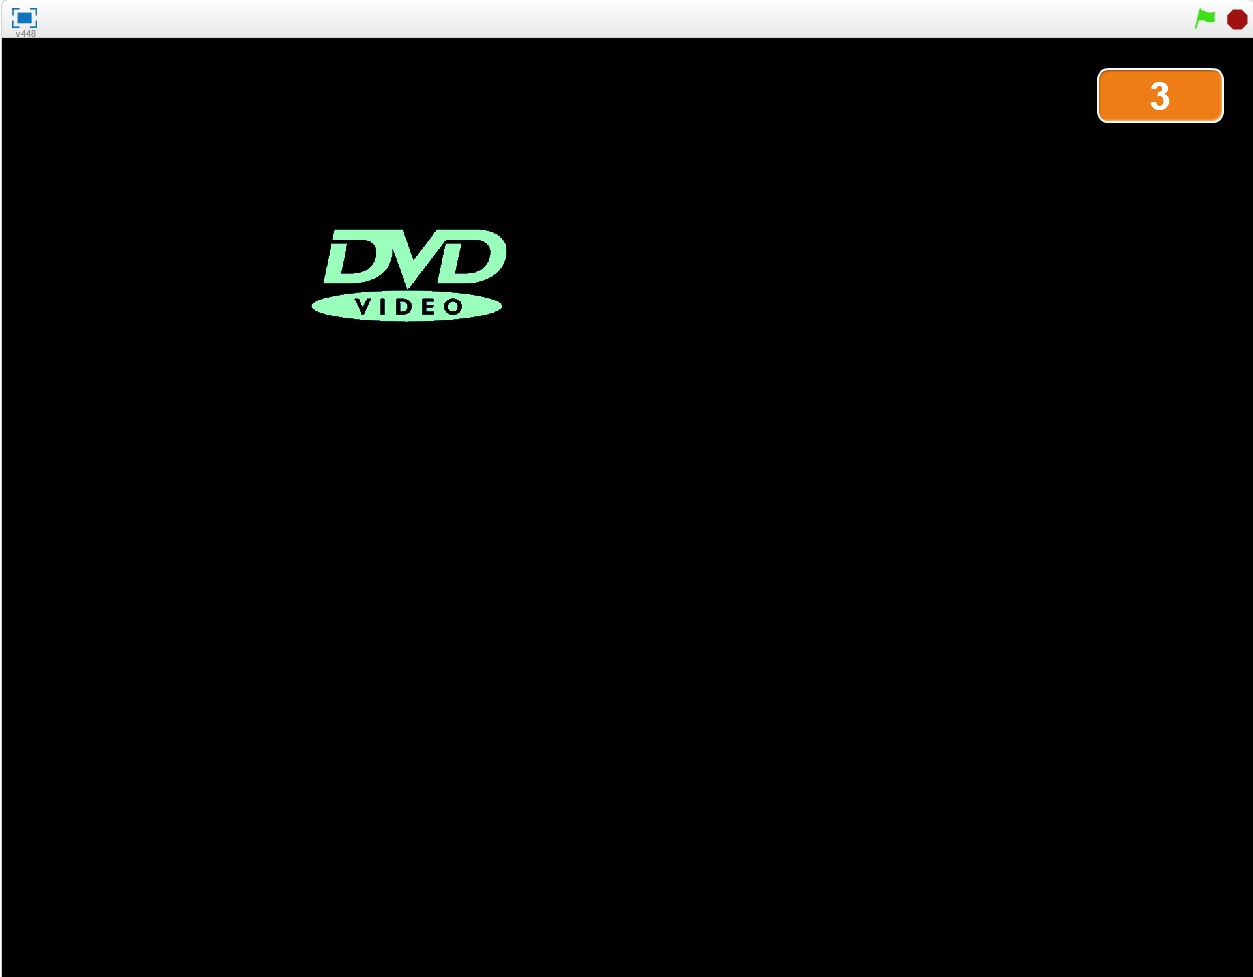 dvd-screensaver-by-puppytrash-games